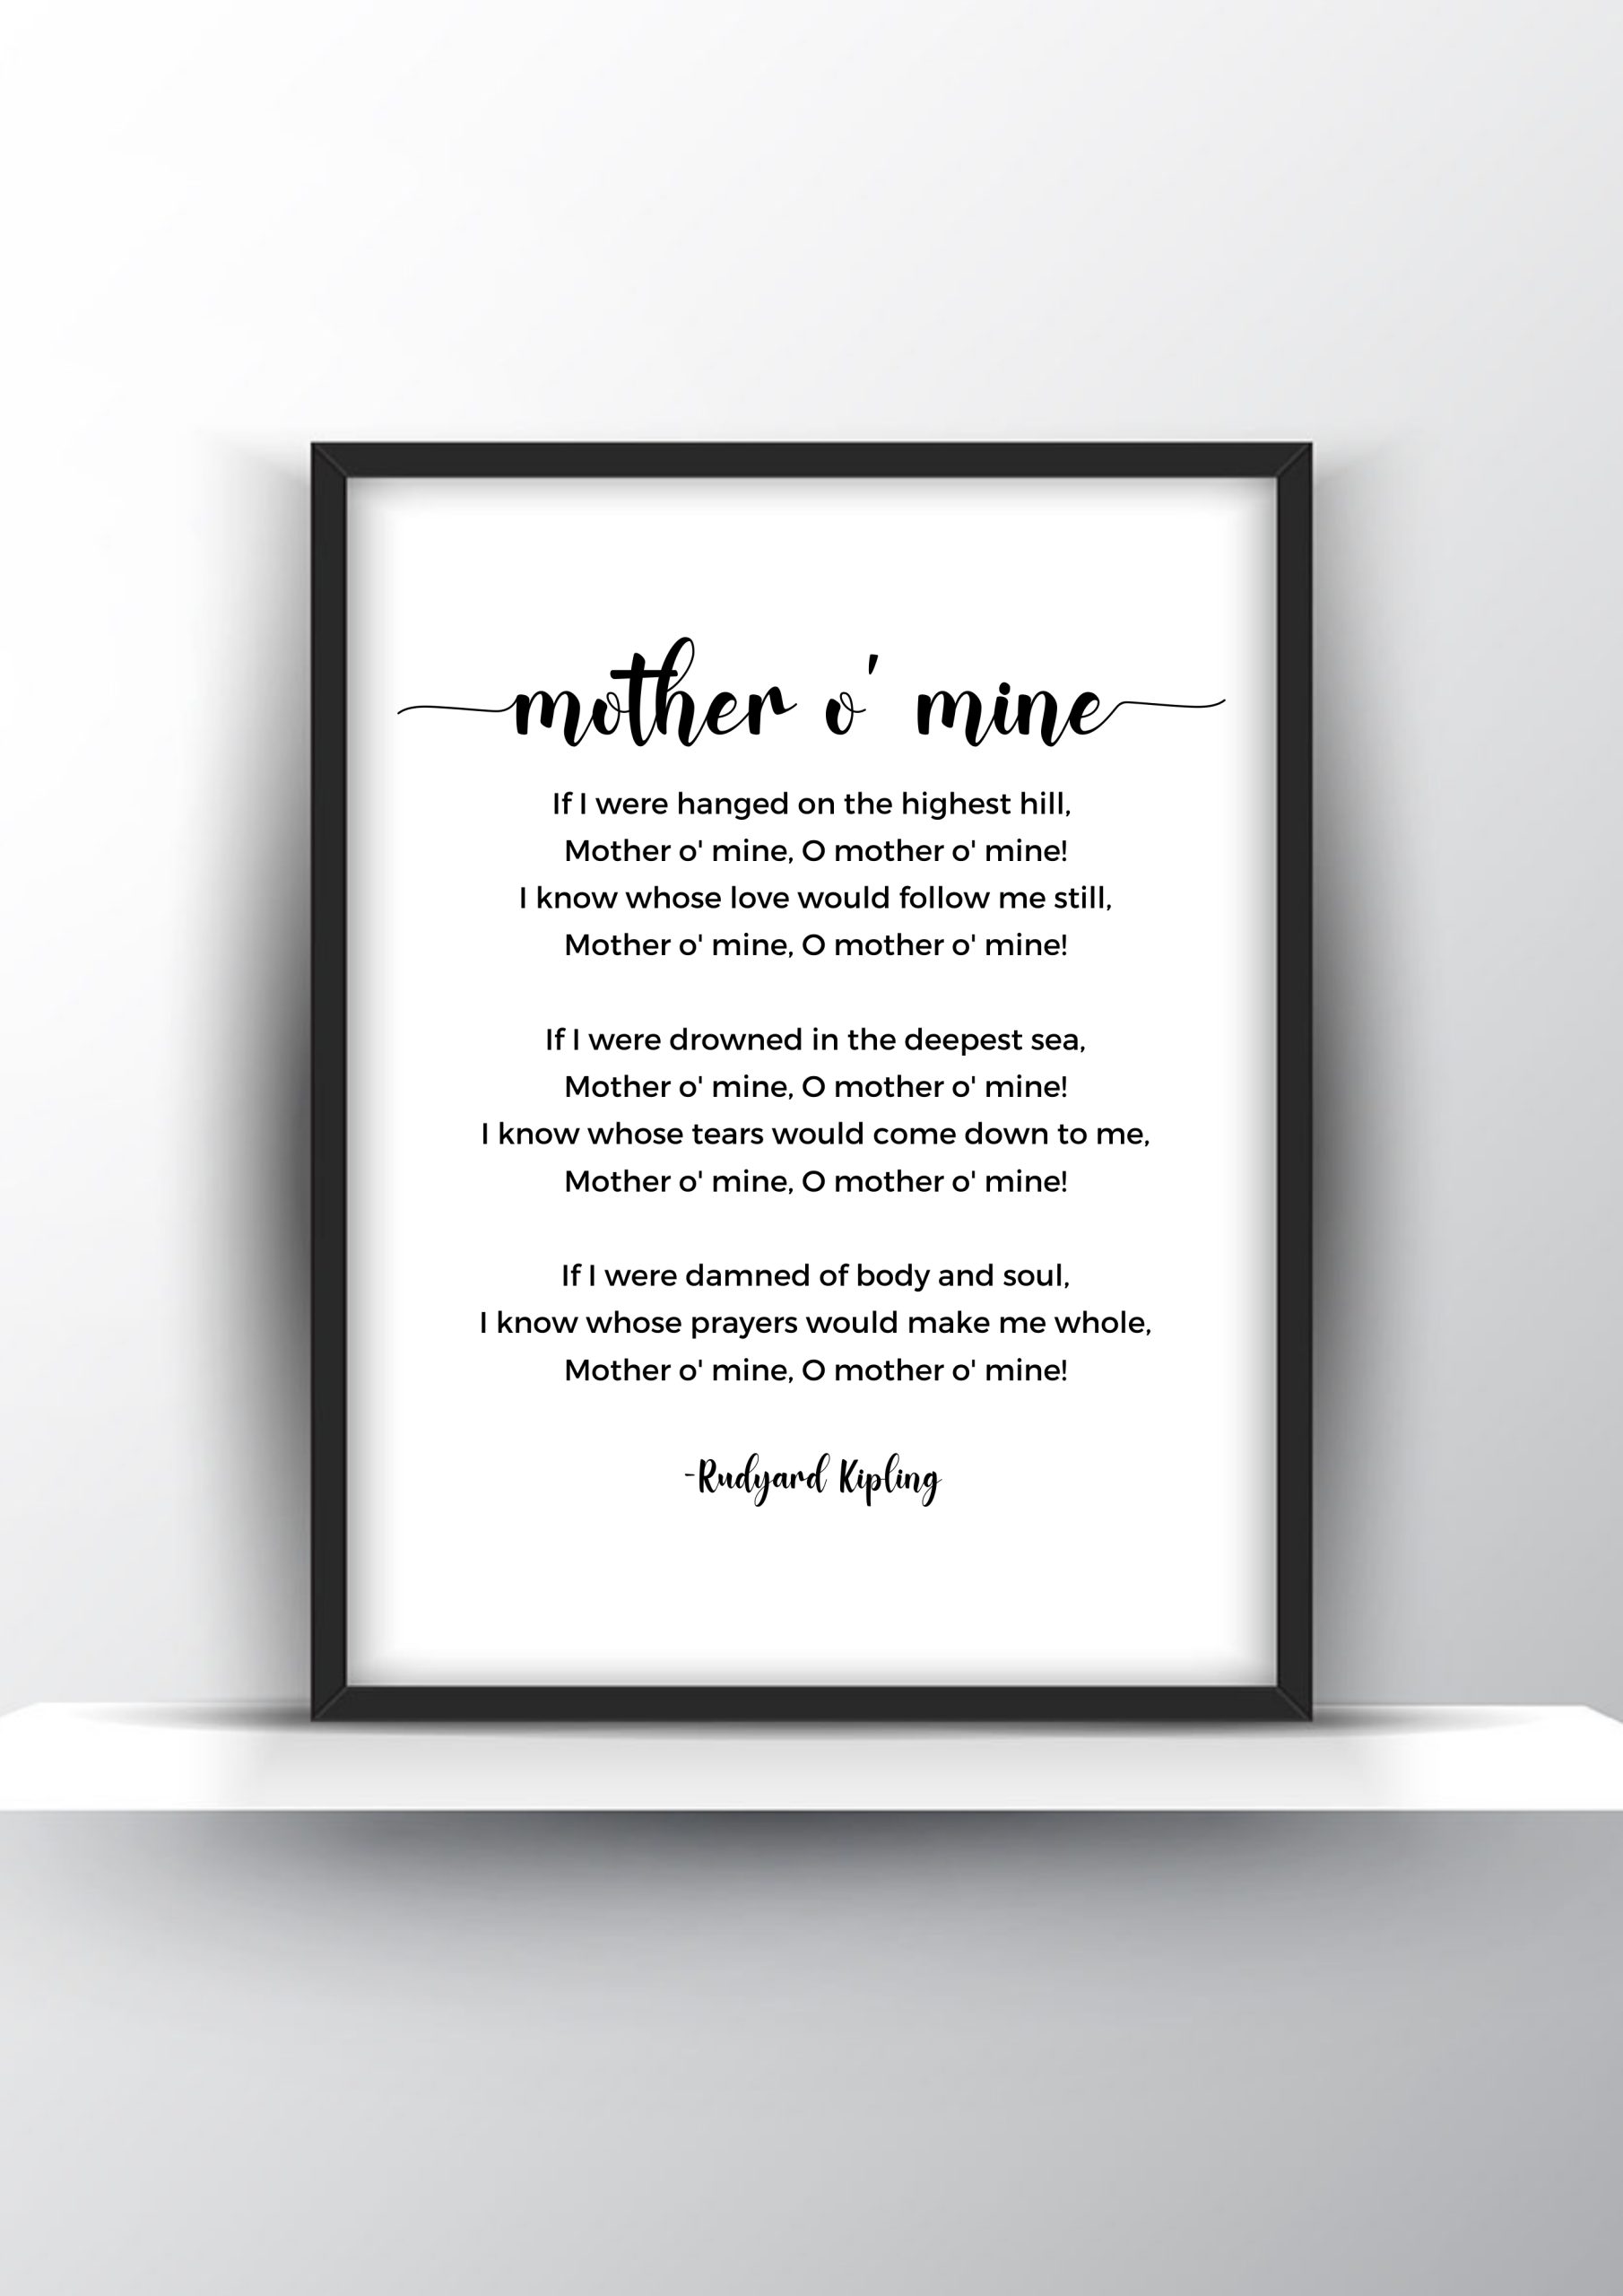 Mother O' Mine Poem by Rudyard Kipling